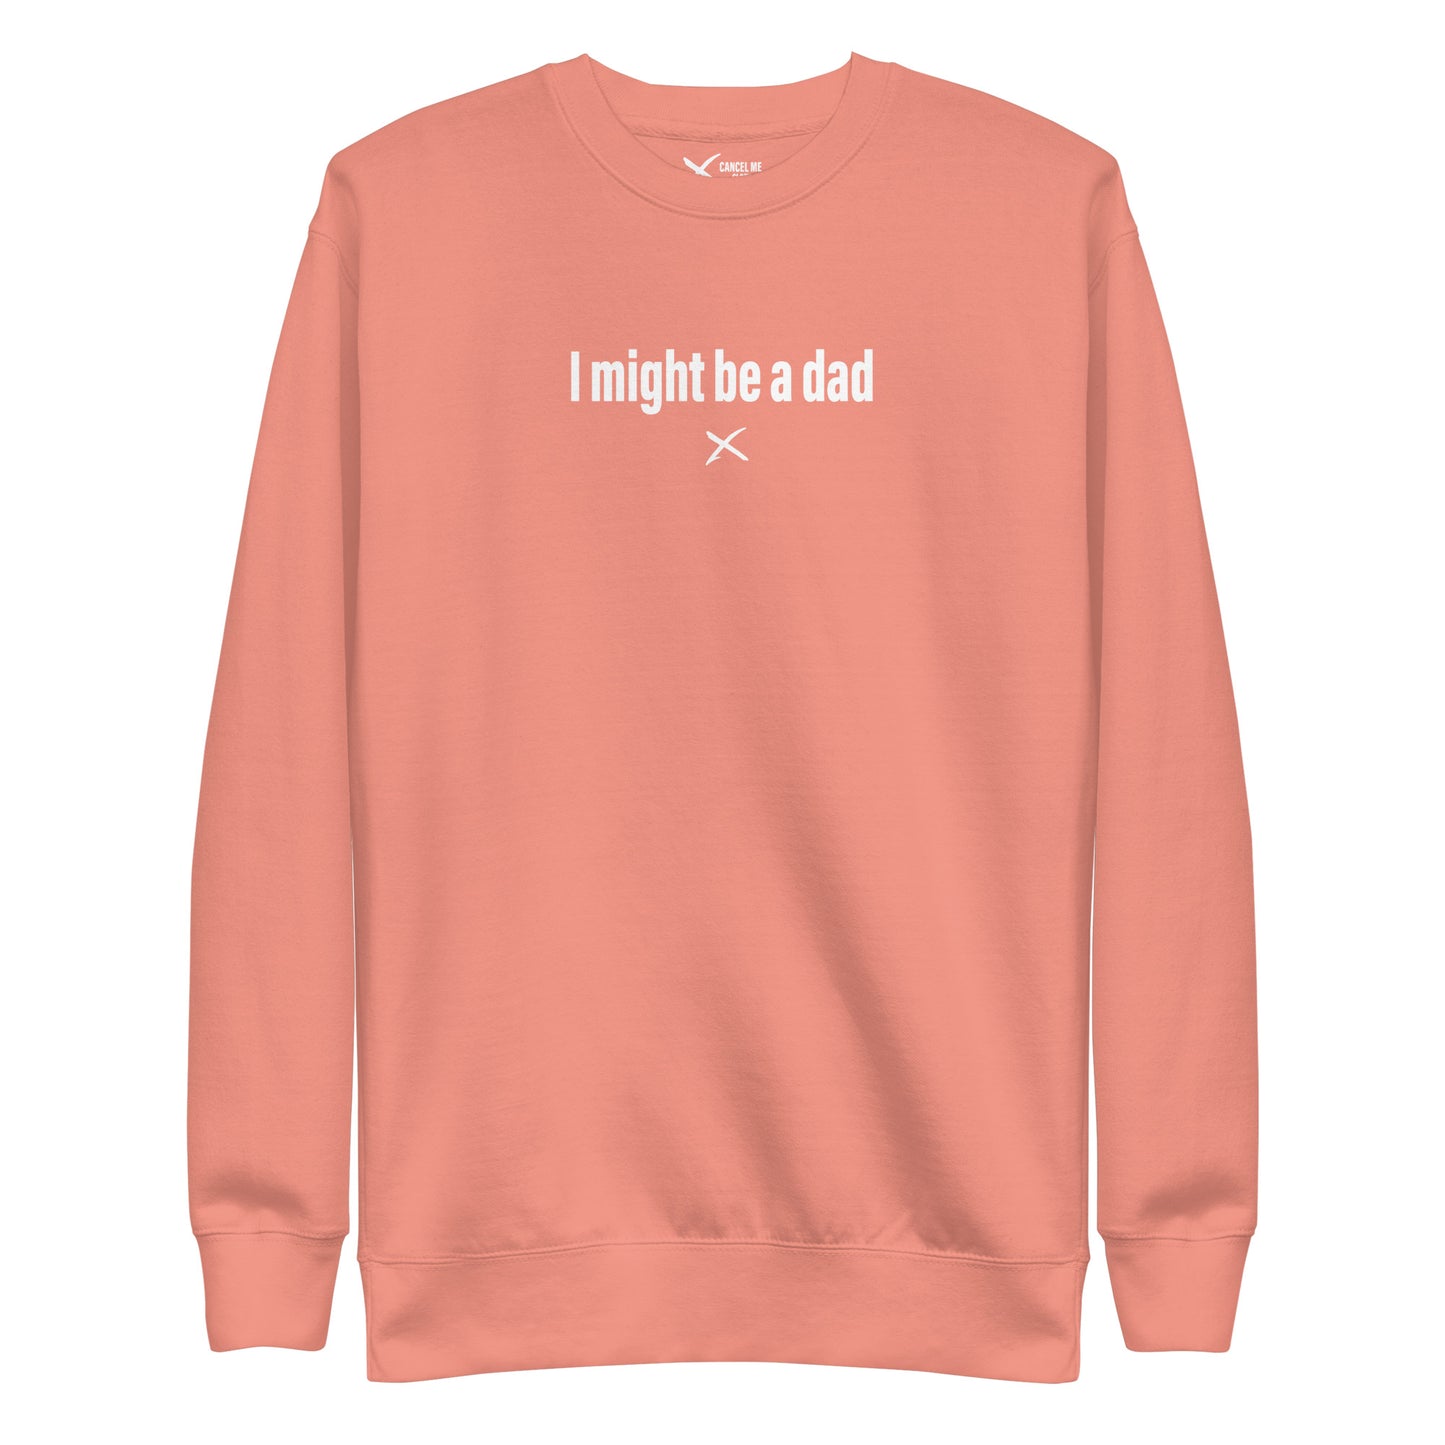 I might be a dad - Sweatshirt